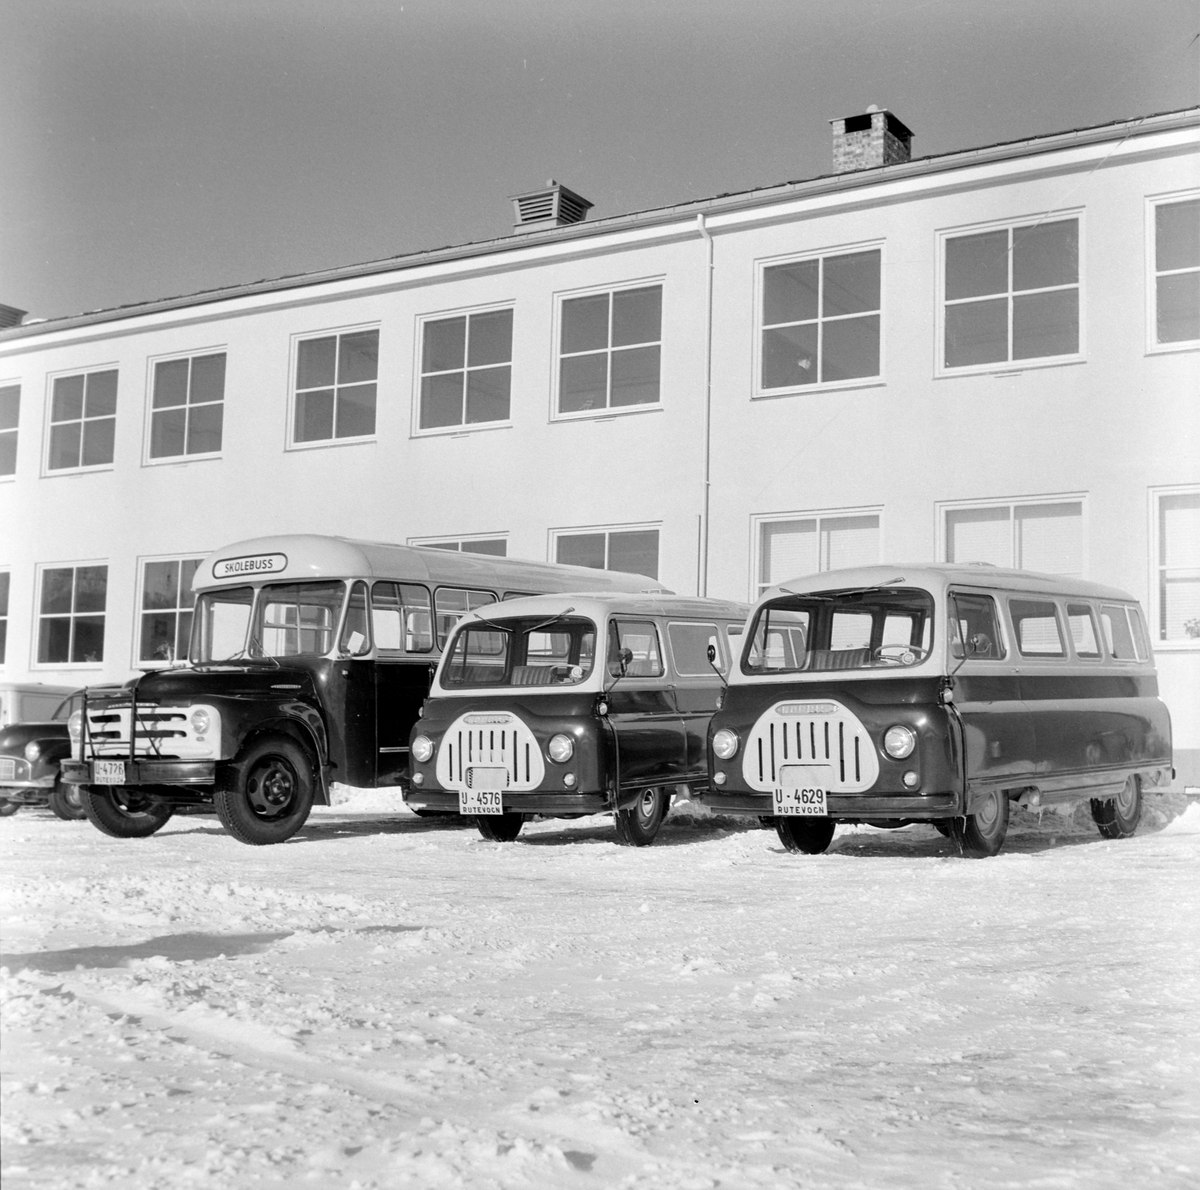 Innvielse av Elverhøy skole i Melhus med skolens busser